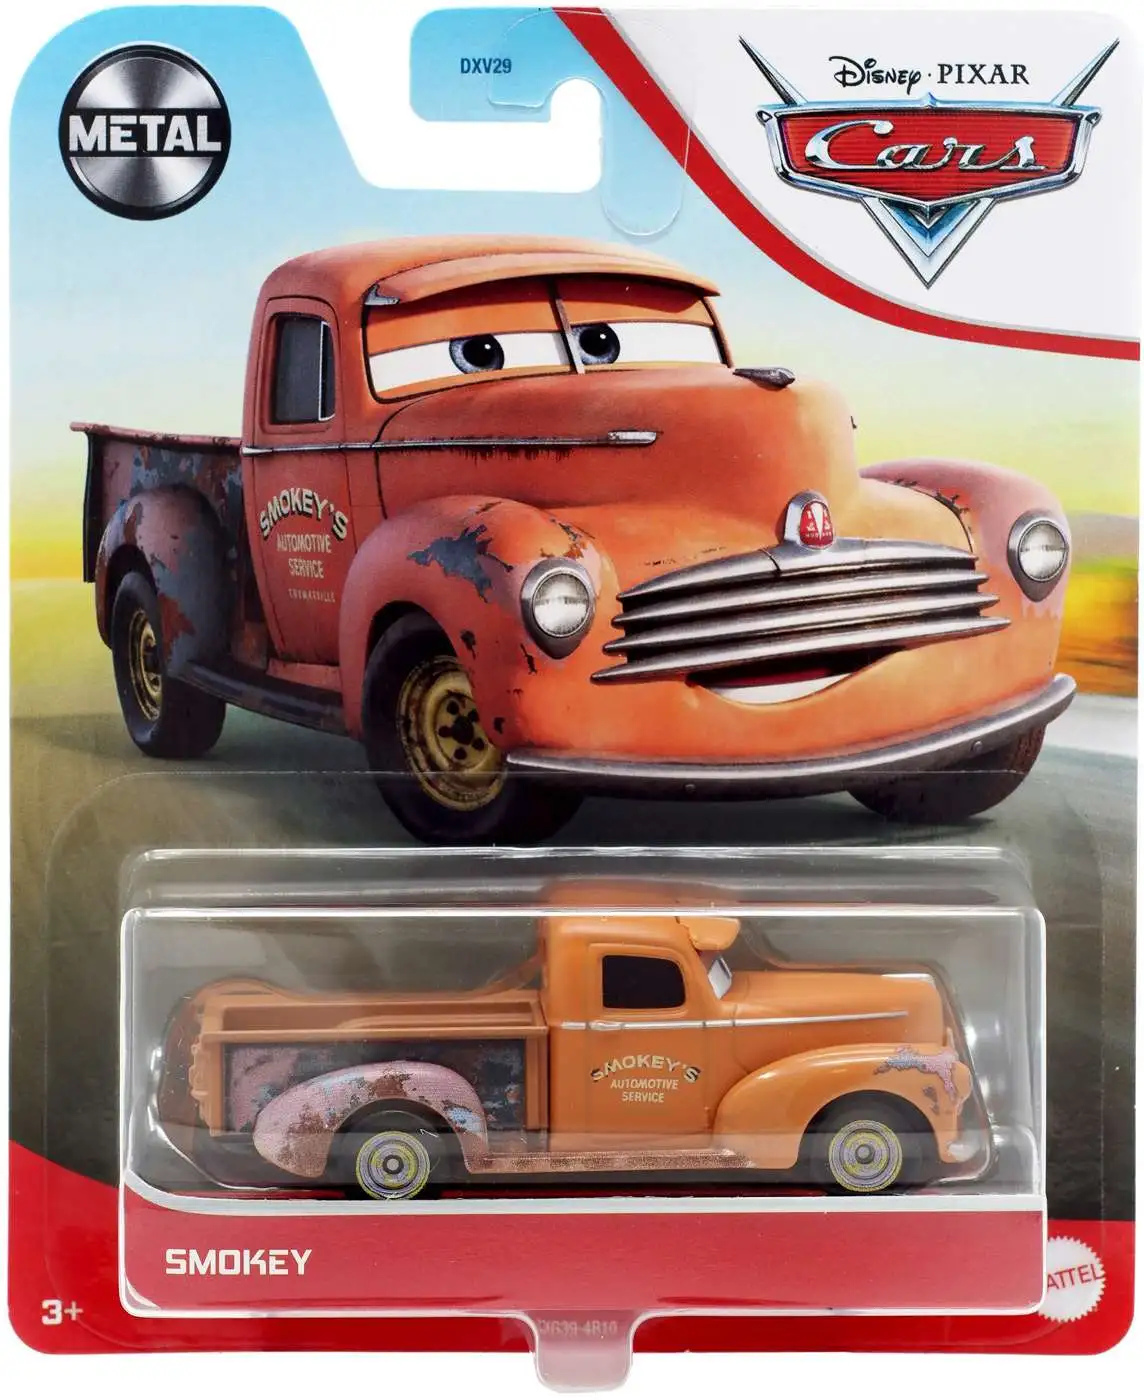 Mattel Disney Pixar Cars 3 SMOKEY Smokey's Automotive Service Truck